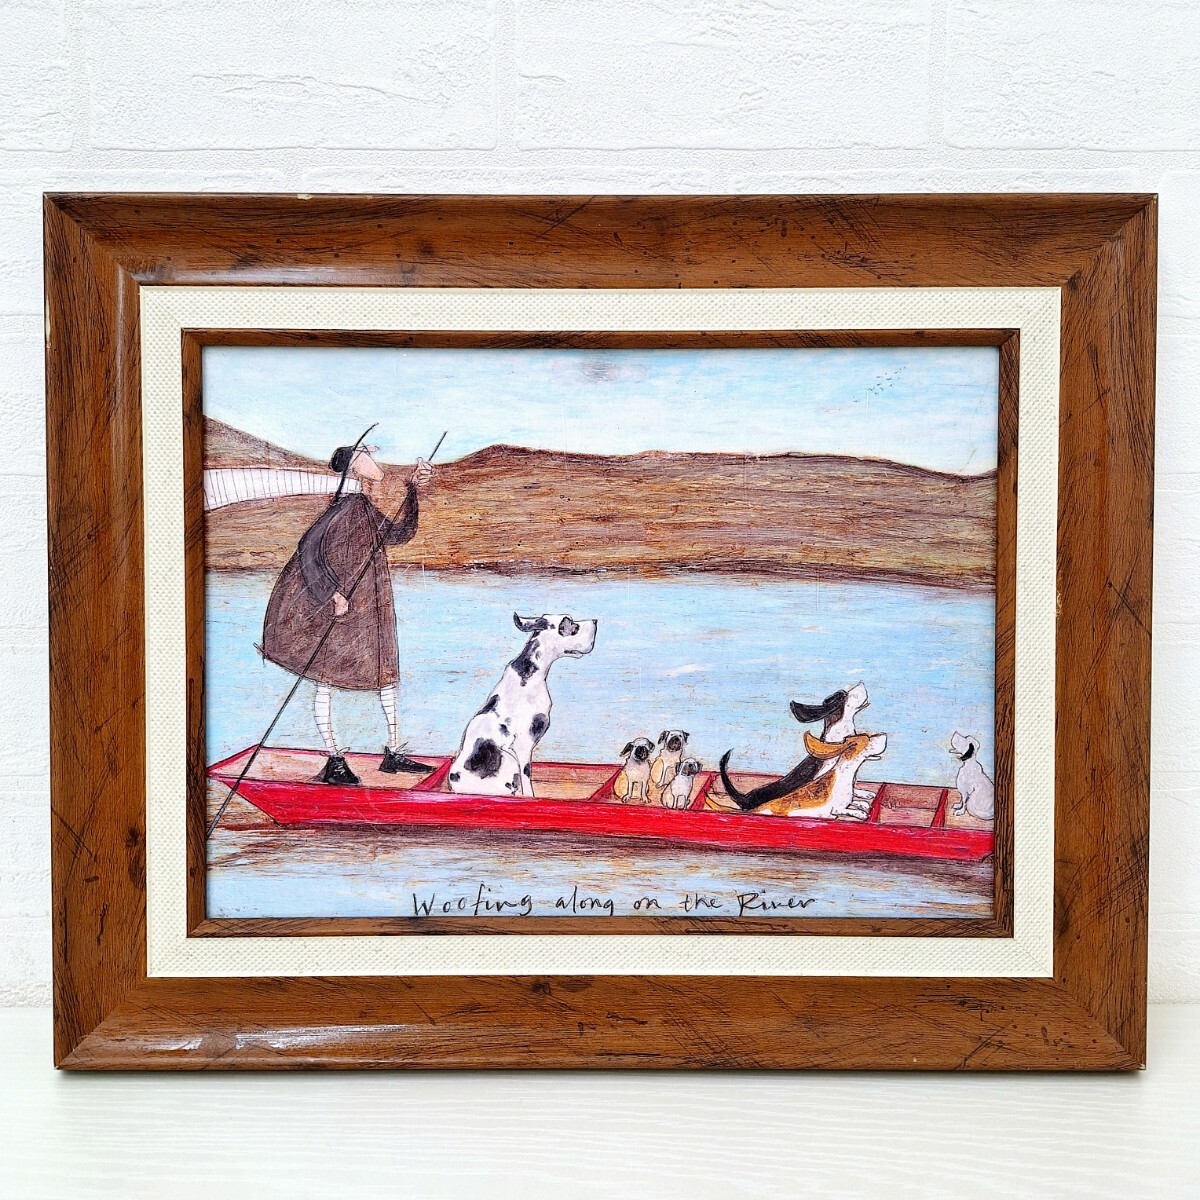 Samtoft Wan Wan River Cruise Картина Художественная рамка Собака Река Британский художник Настенная картина для интерьера Картина маслом Art Art WK, мебель, интерьер, аксессуары для интерьера, другие